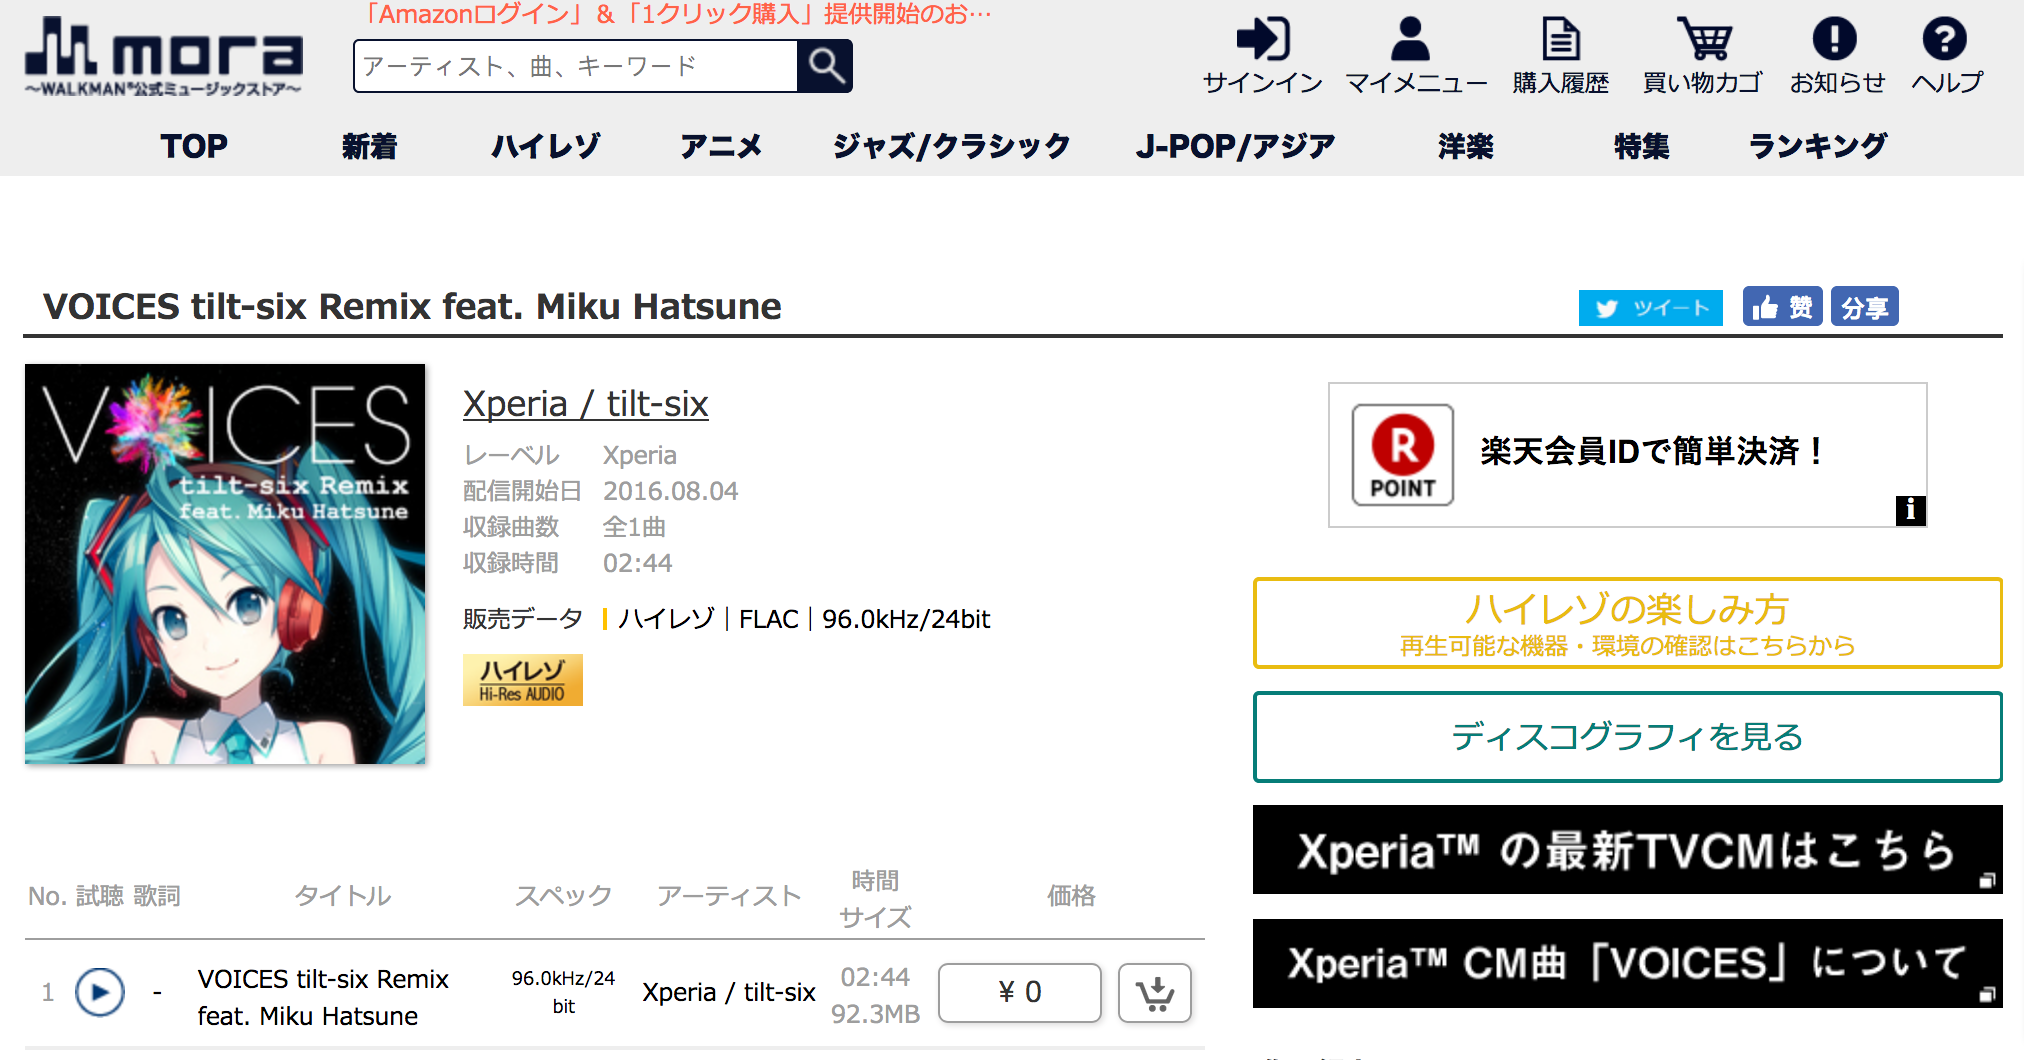 mora.jp上的一首免费歌曲，索尼手机卖萌用